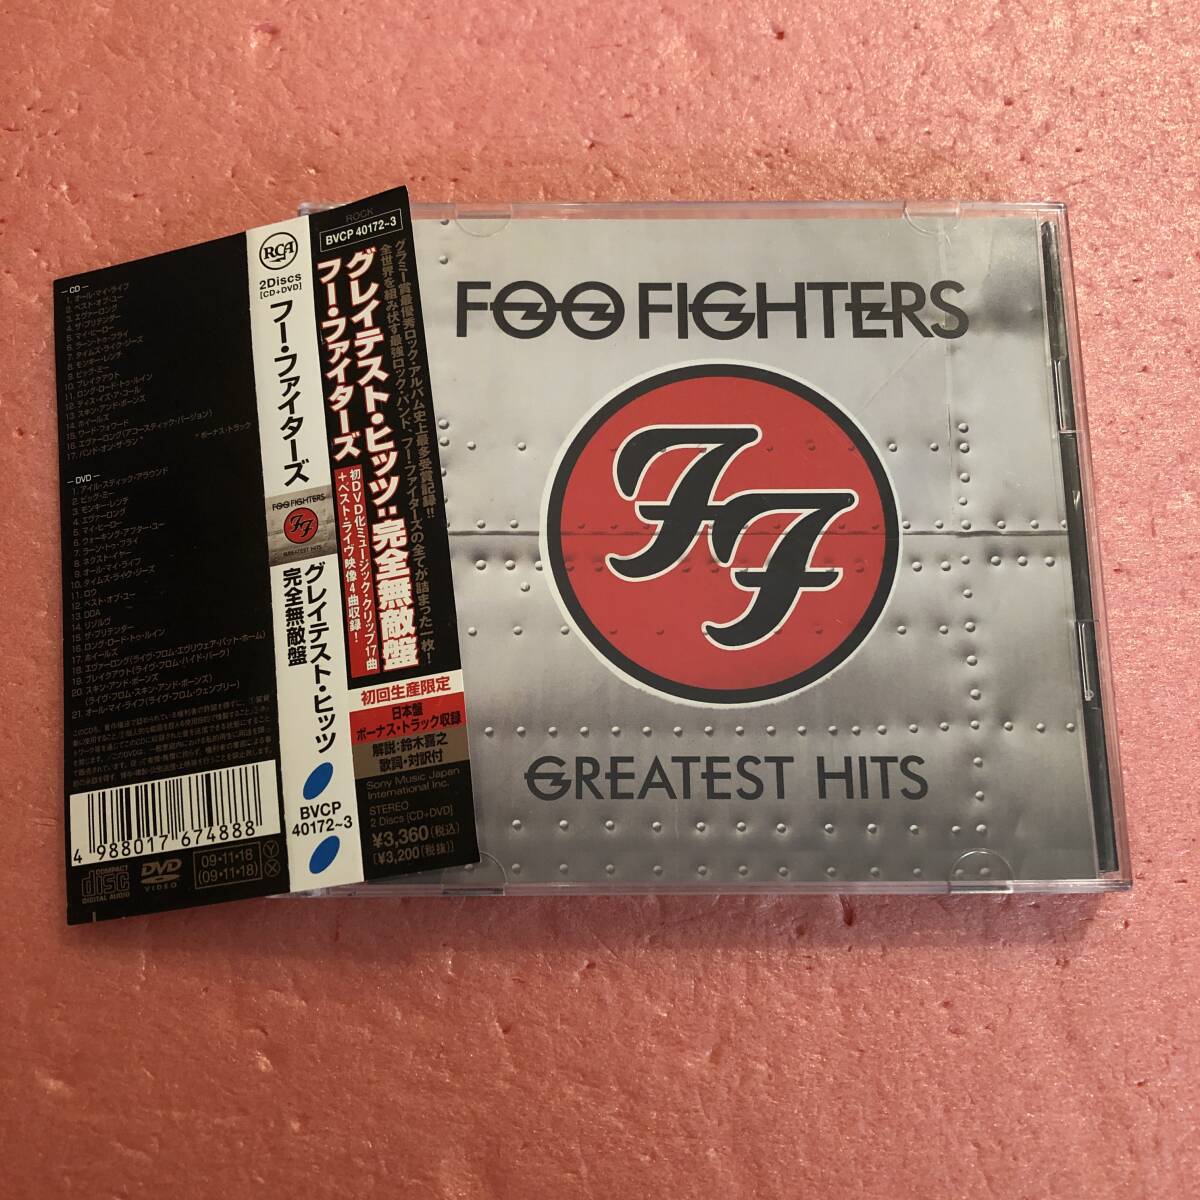 CD+DVD 国内盤 ボーナストラック 帯付 フー ファイターズ グレイテスト ヒッツ 完全無敵盤 Foo Fighters Greatest Hits Nirvana_画像1